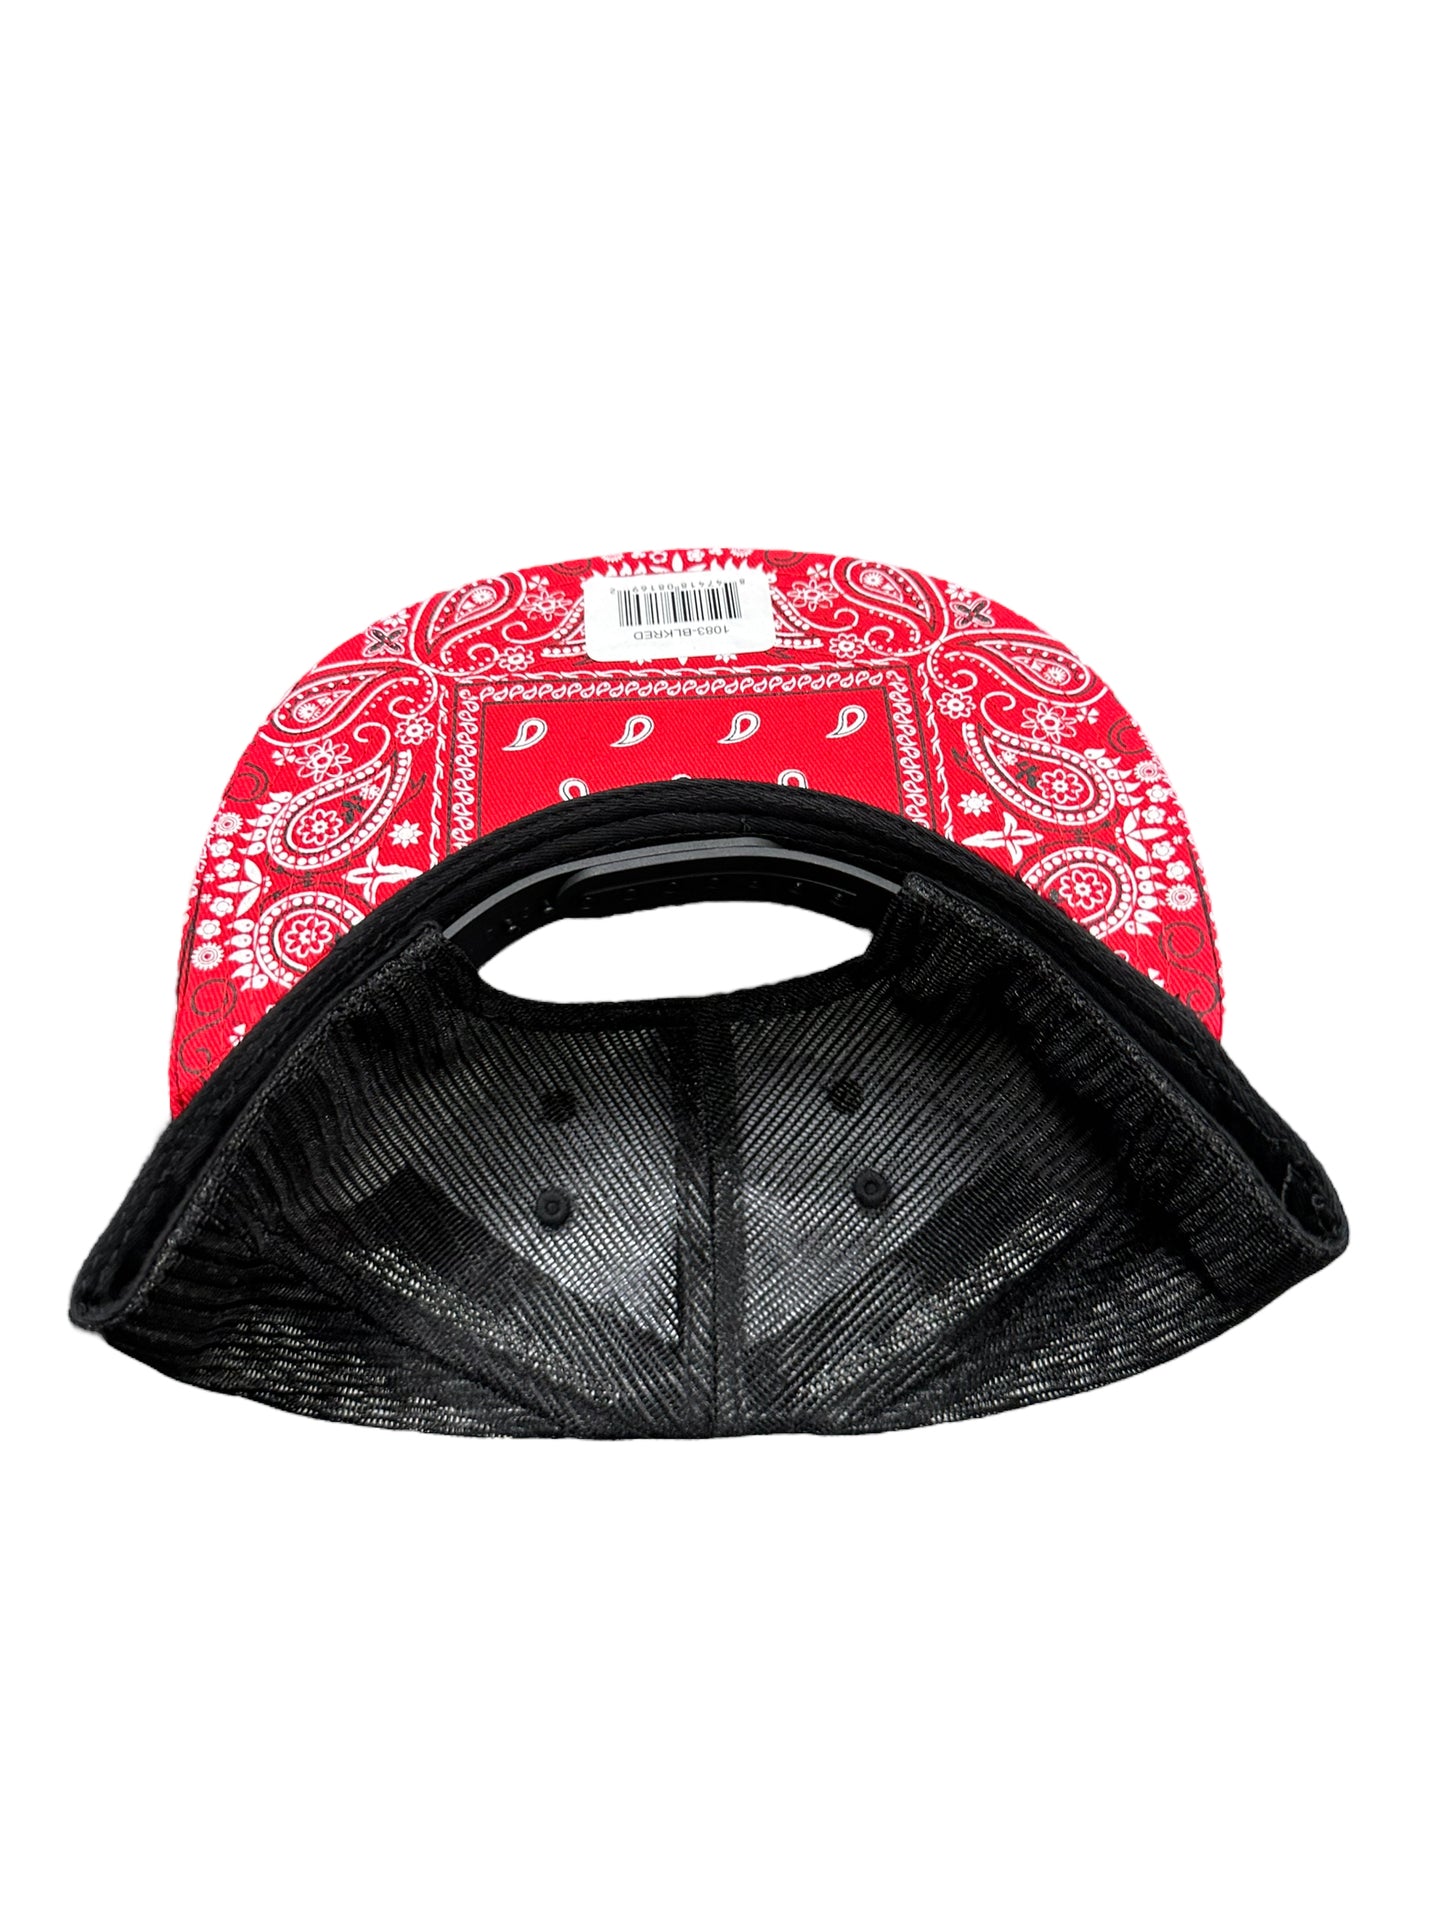 Black & Red bandana printed brim SnapBack hat